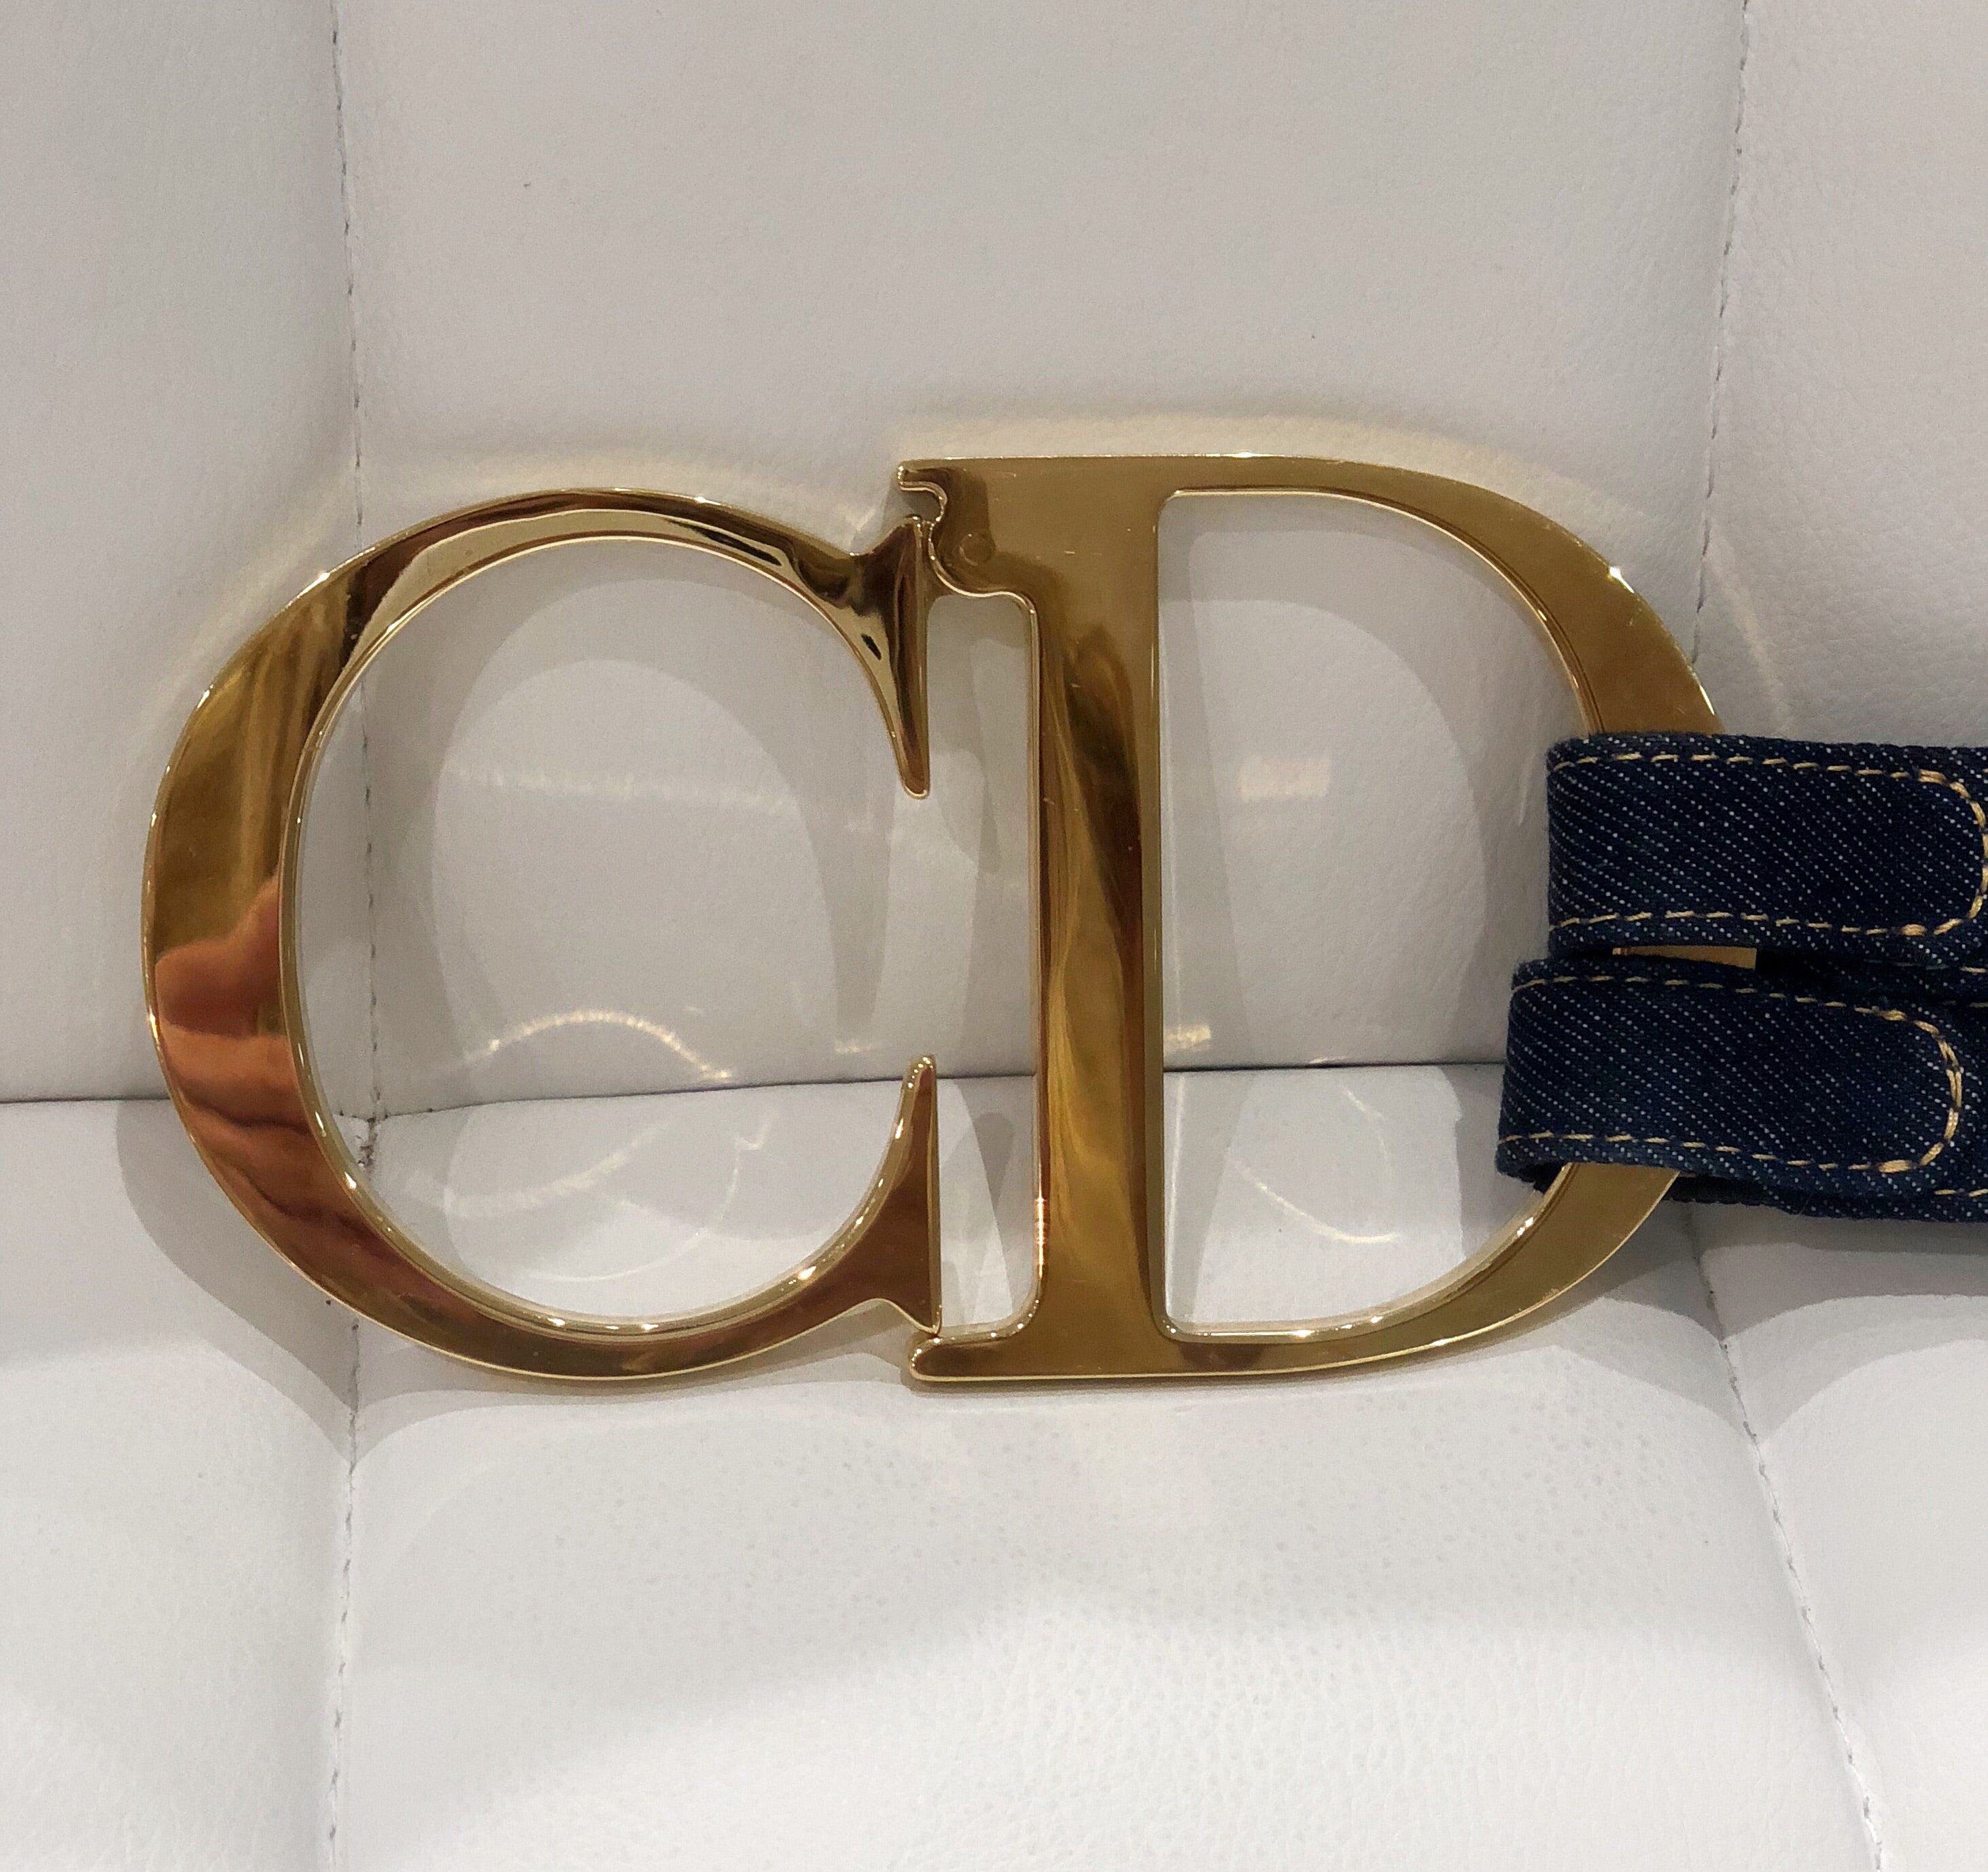 Christian Dior Massive Logo Belt